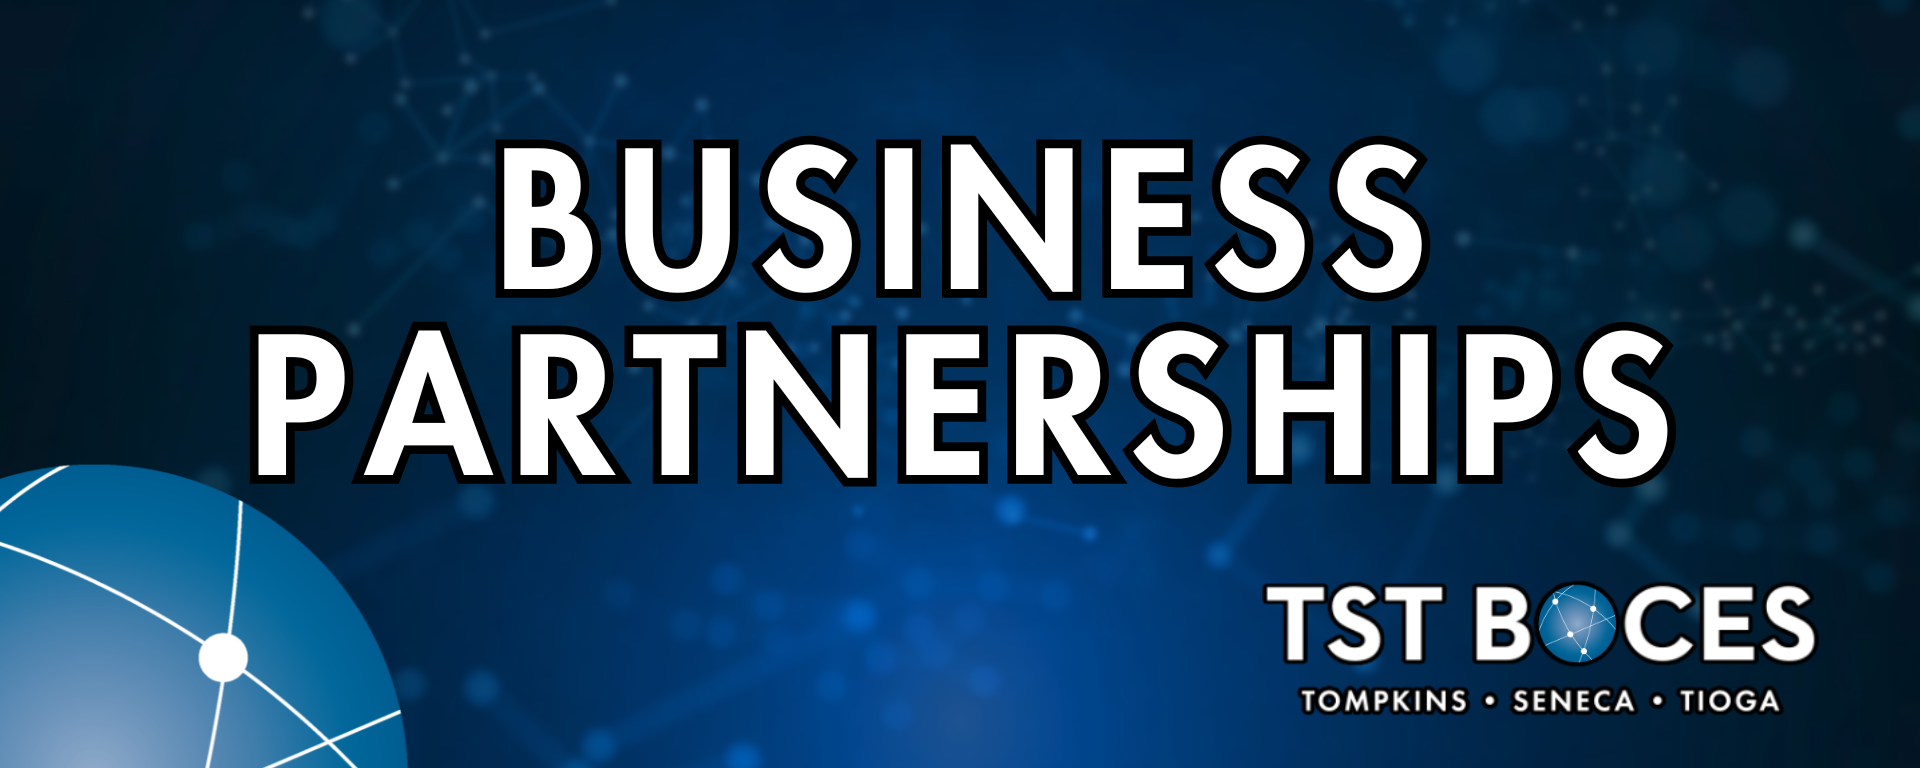 Business Partnerships banner